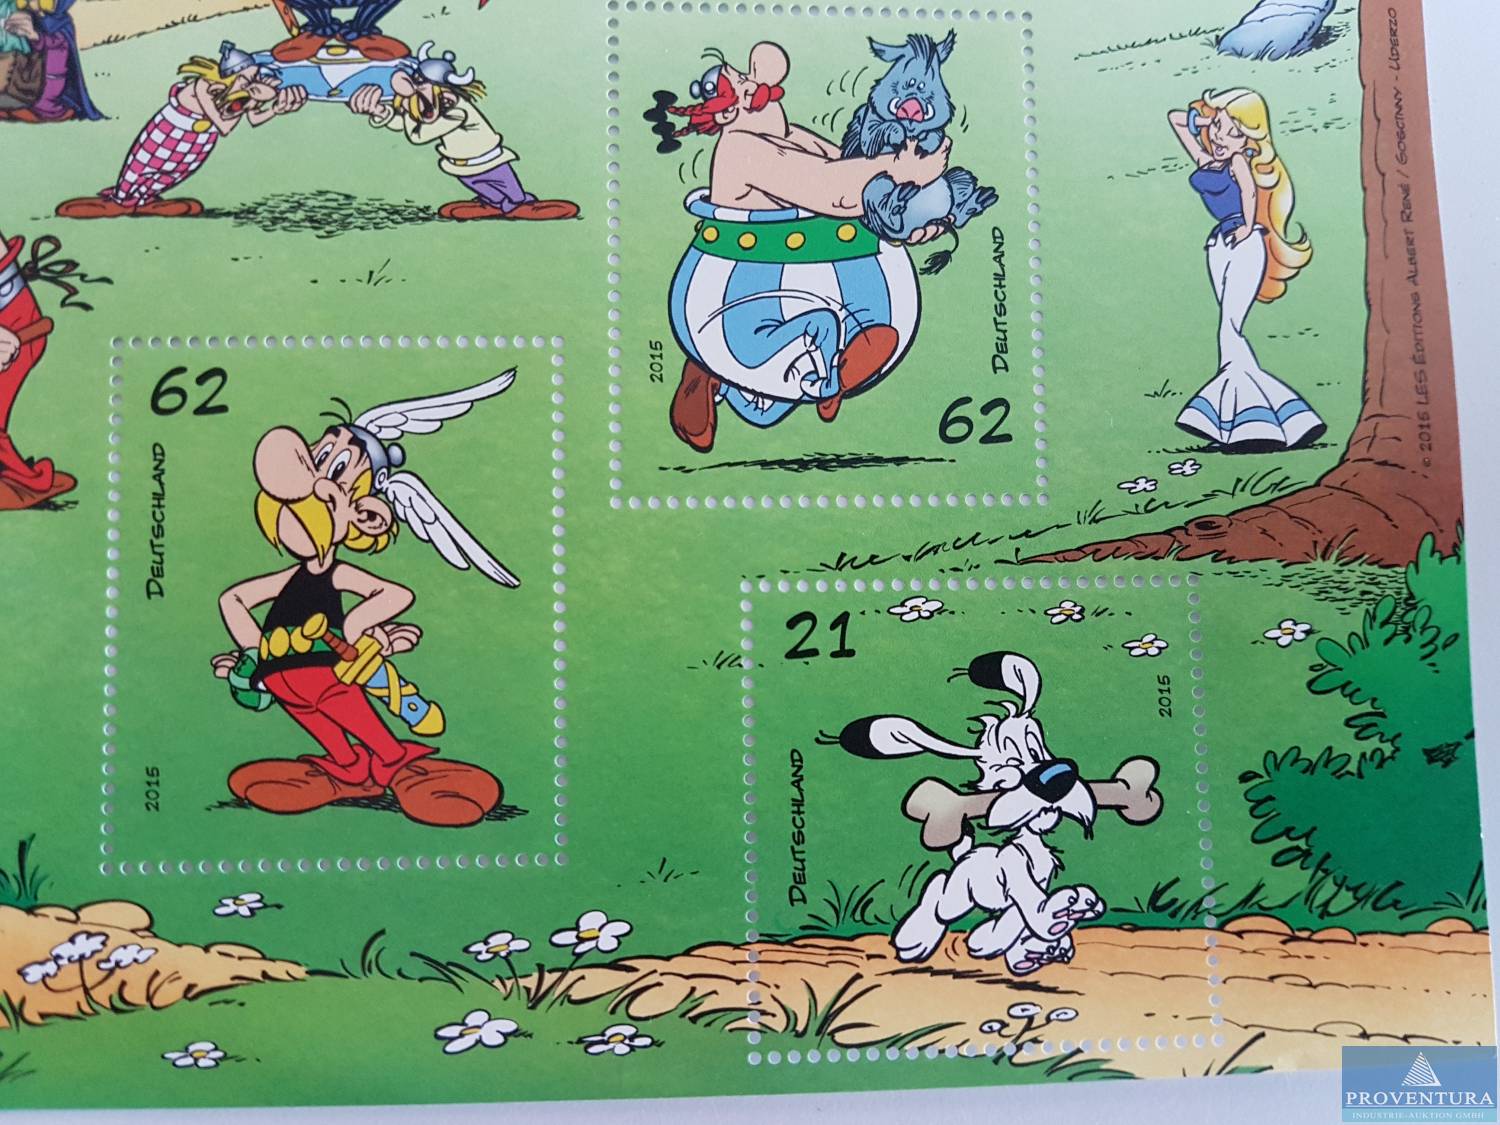 Versteigerung 736 Briefmarkenblöcke BRD Asterix & Obelix Block 80 62+62+21 ct 1.45 EUR, Frankaturwert 1.067,20 EUR